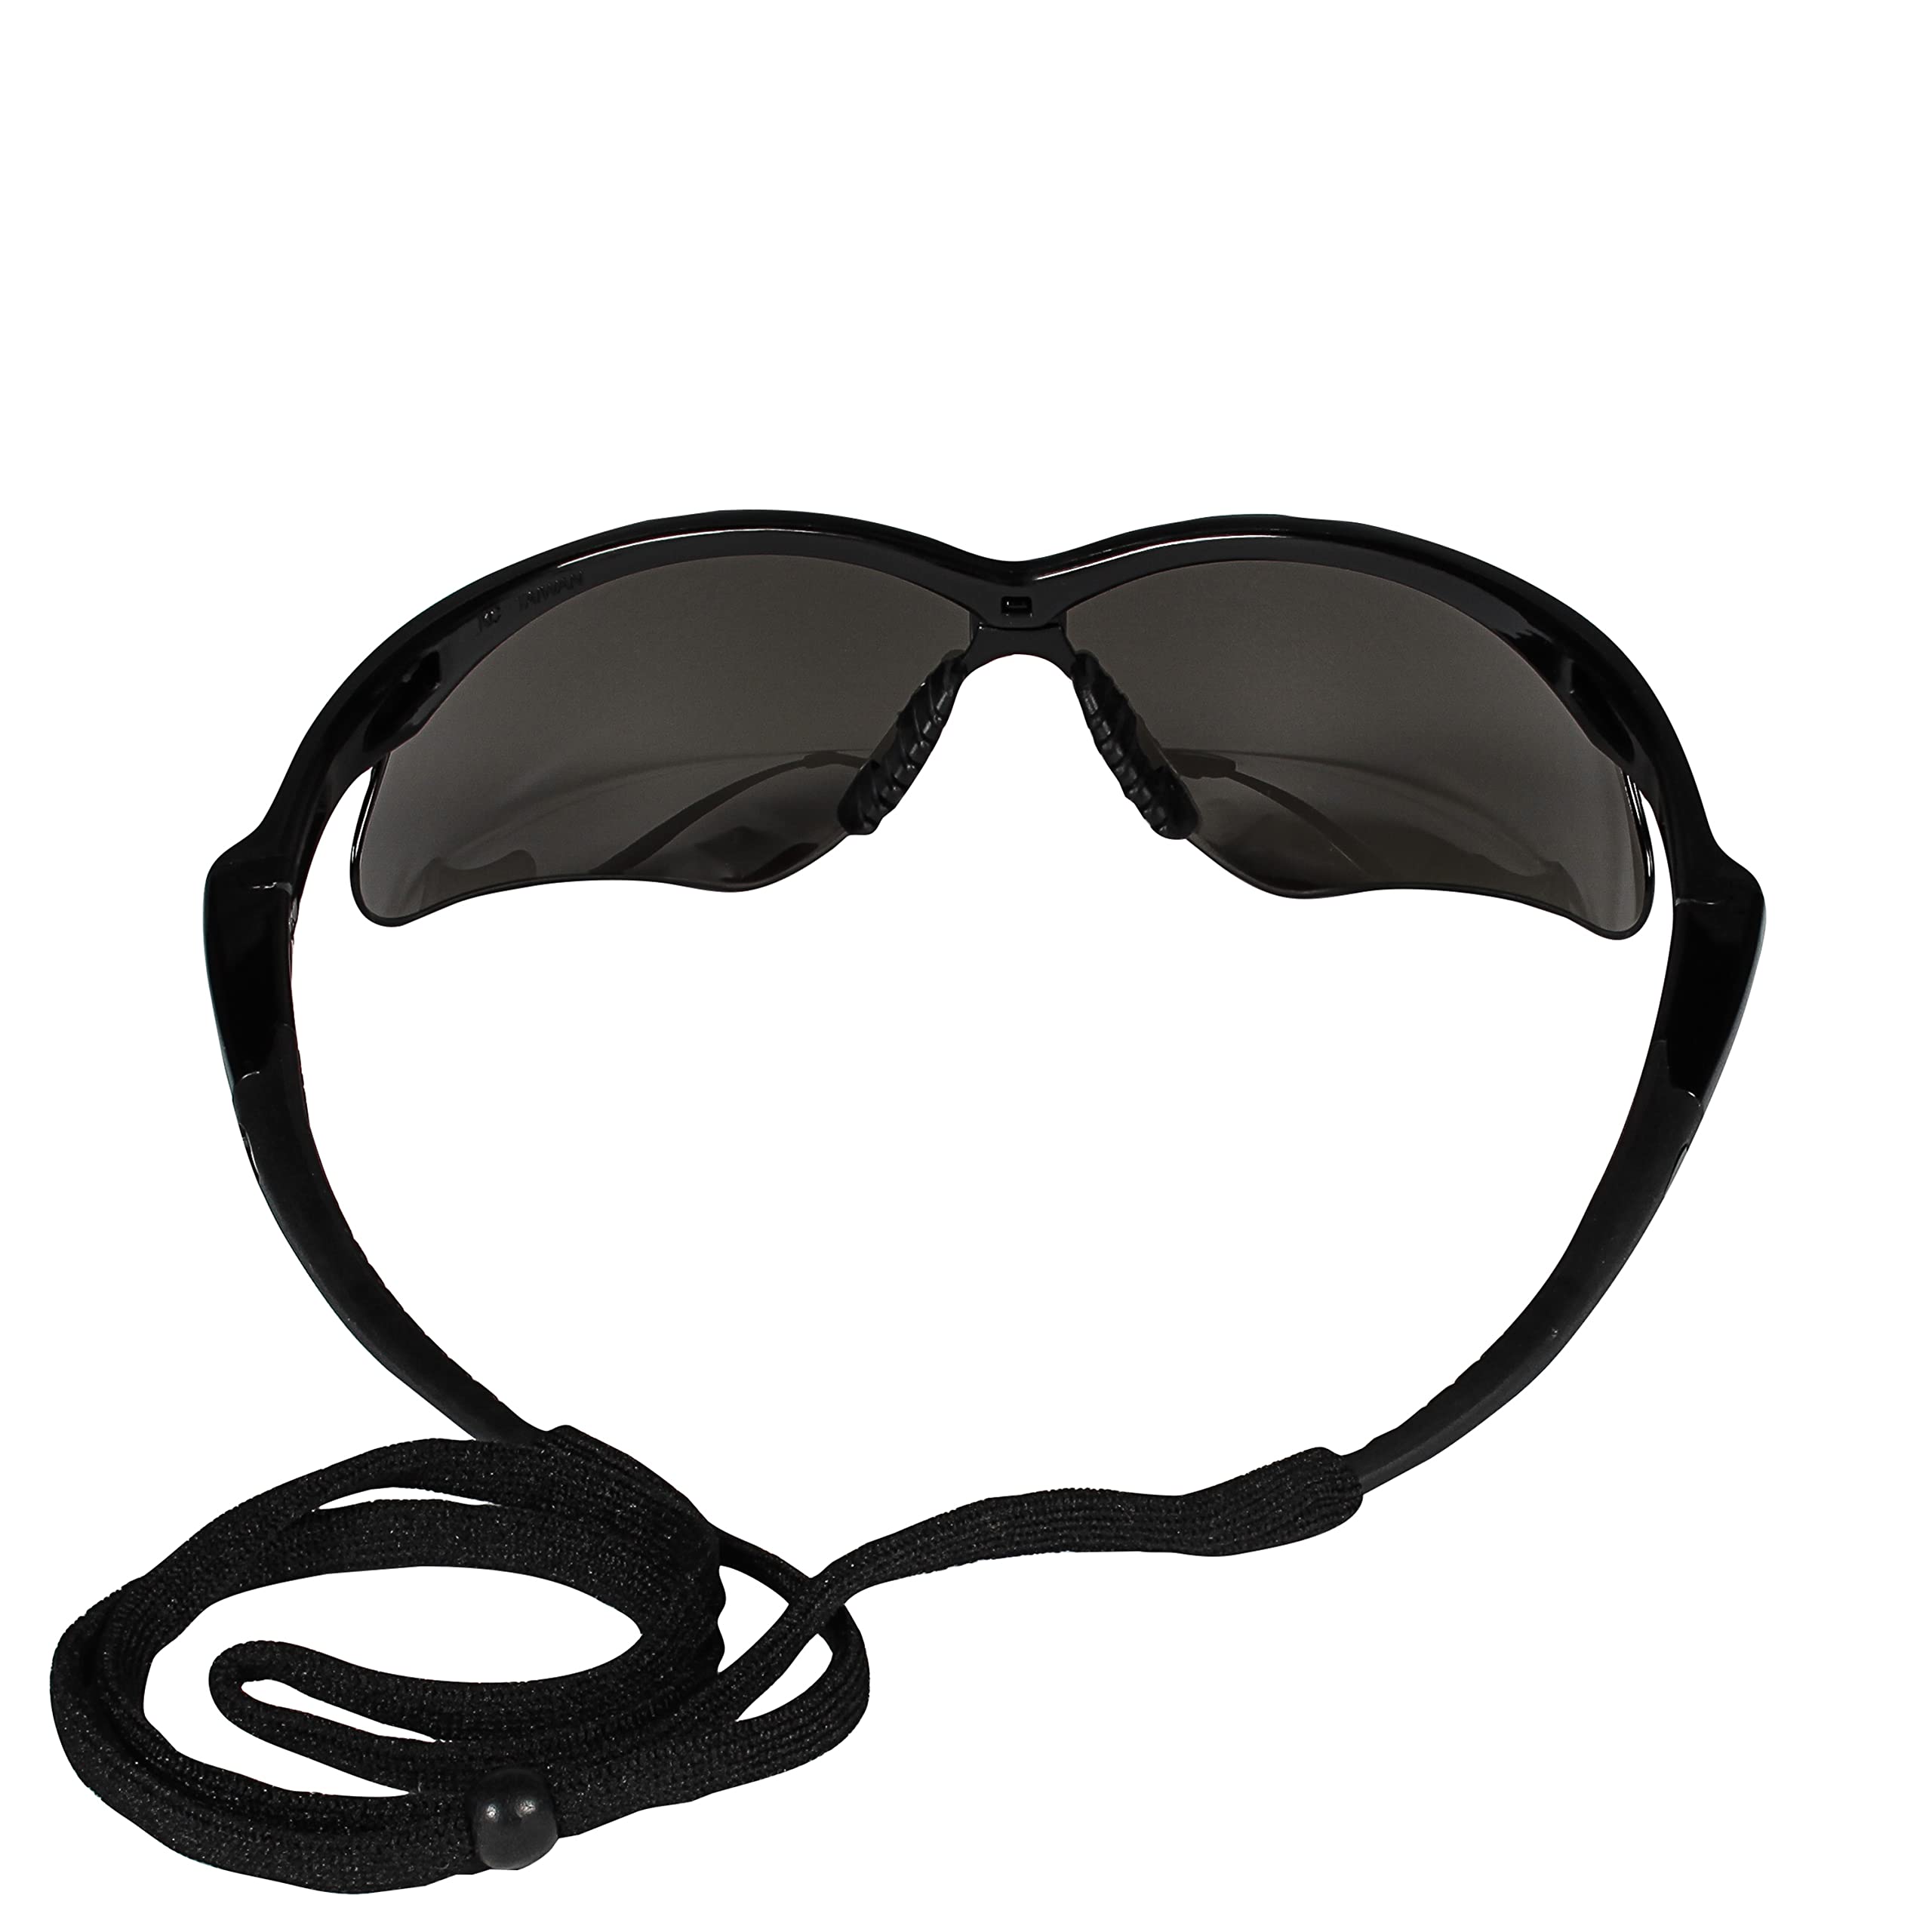 KleenGuard™ V30 Nemesis™ Safety Glasses (25688), with Mirror Coating, Smoke Lenses, Black Frame, Unisex Sunglasses for Men and Women (Qty 12)